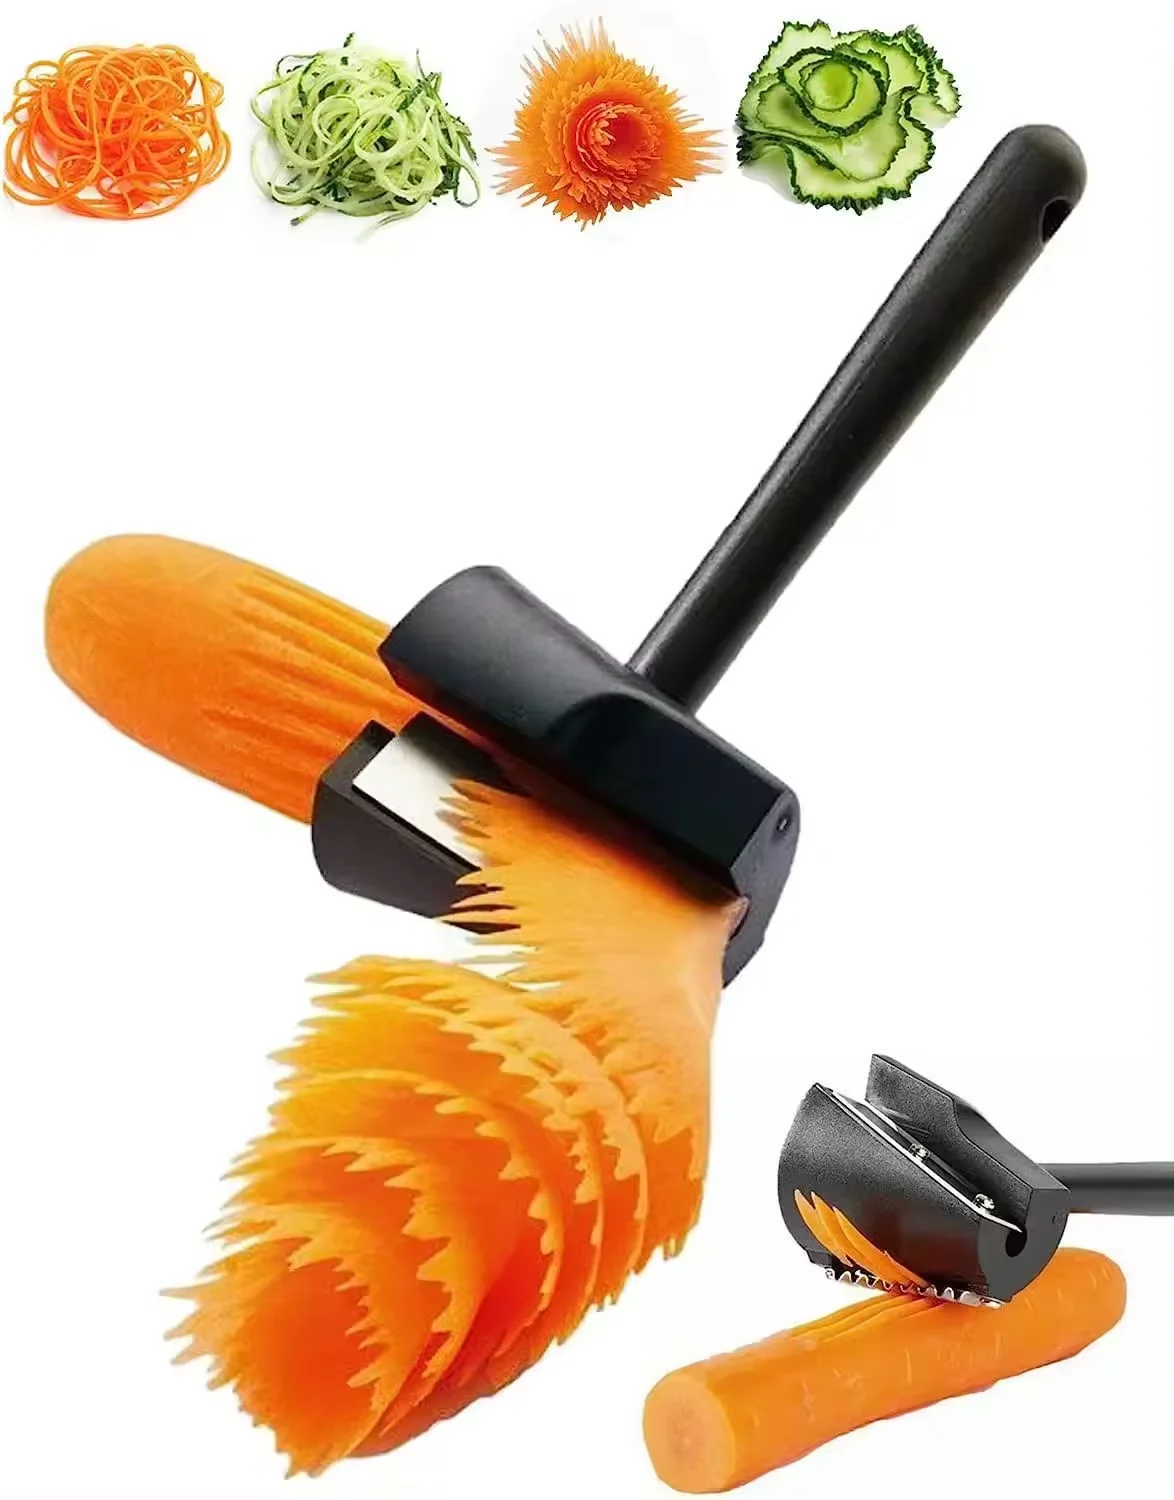 kitchen tools 2 In 1 spiral potato cutter Accessories Tools Vegetable Spiral Chopper Peeler Carrot Spiral Curler Vegetable Roll